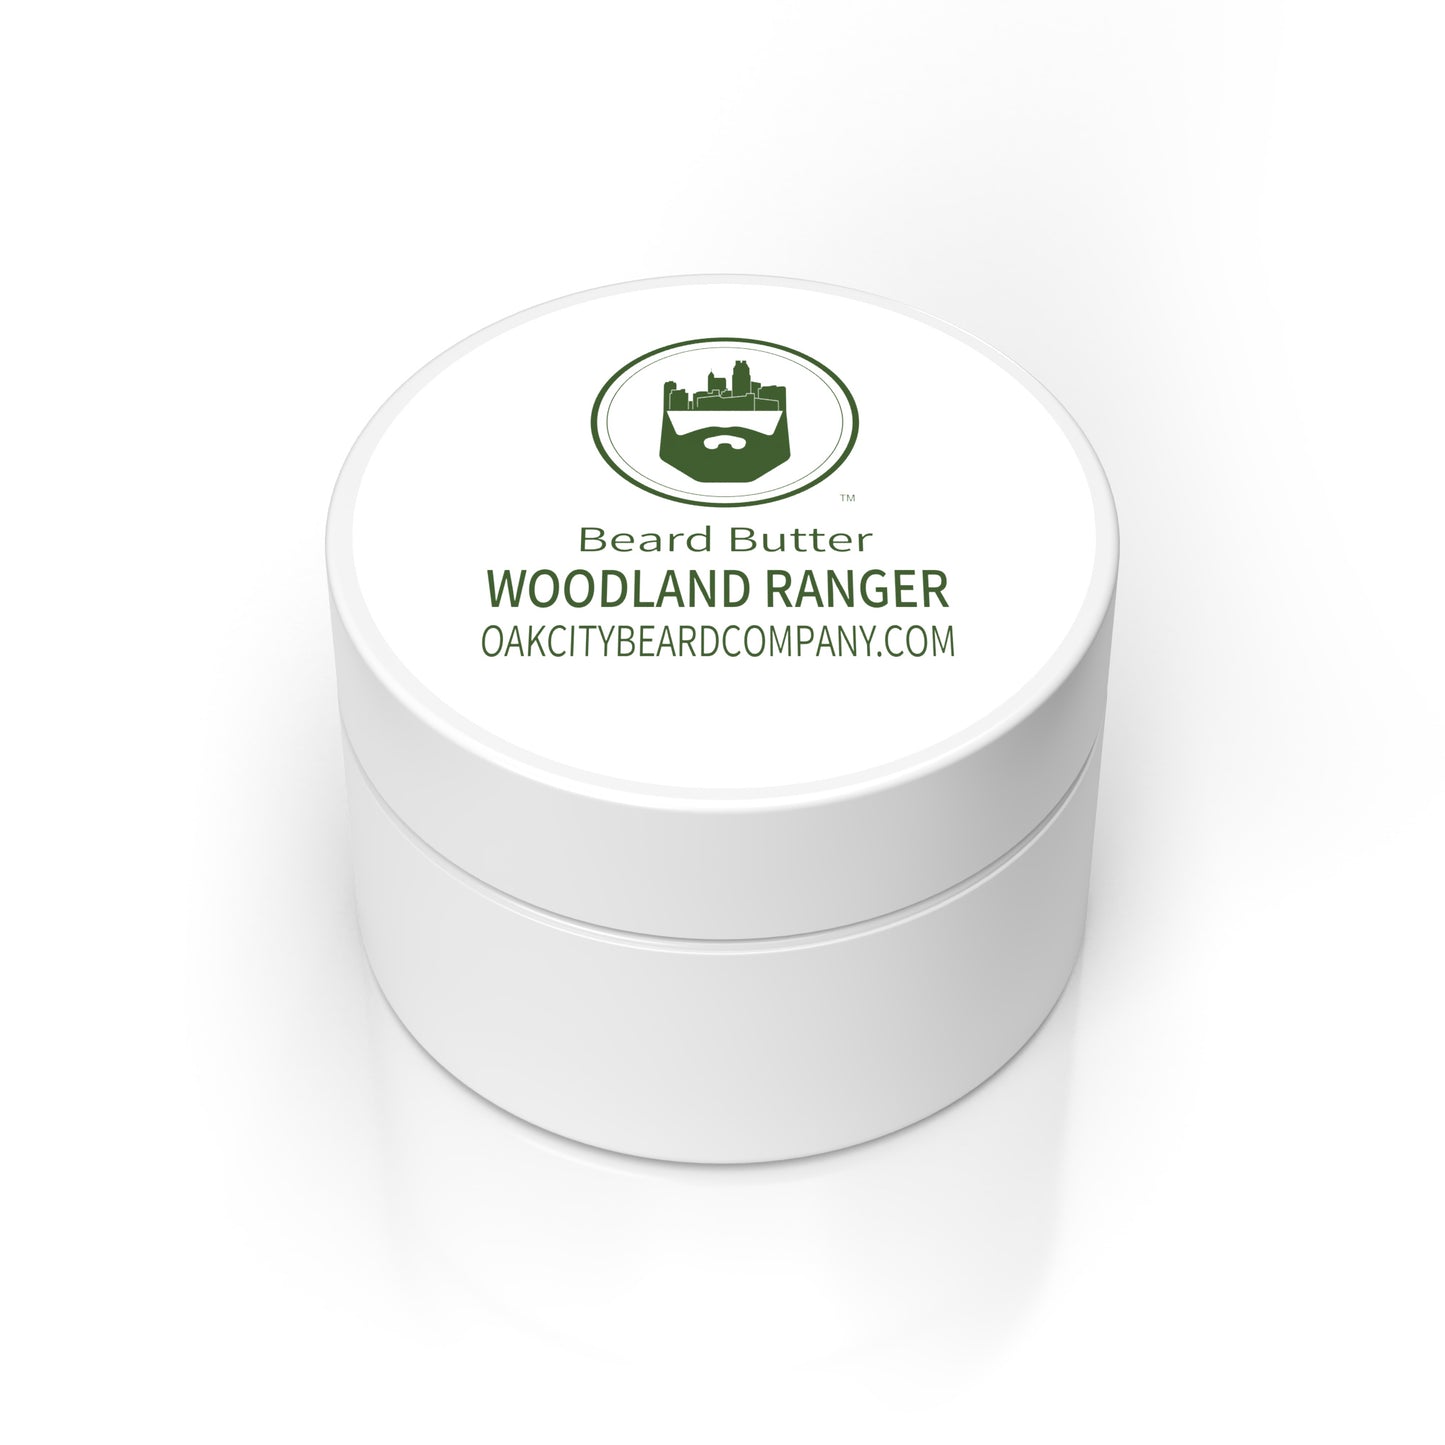 Woodland Ranger (Beard Butter) by Oak City Beard Company